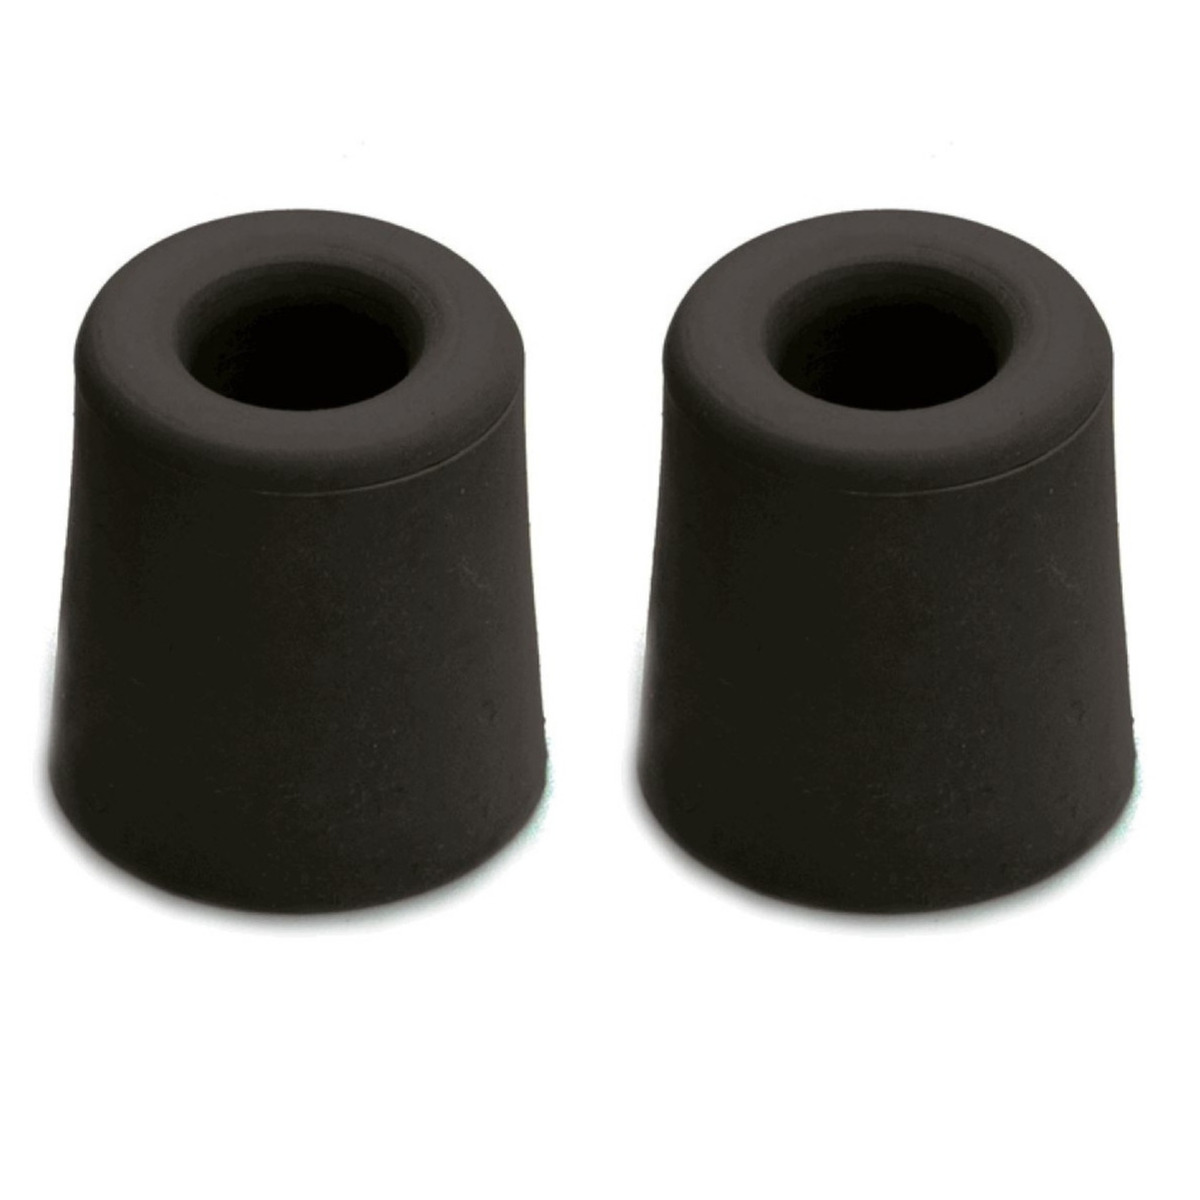 5x stuks deurstopper-deurbuffer rubber zwart 4,8 x 3,7,7 cm